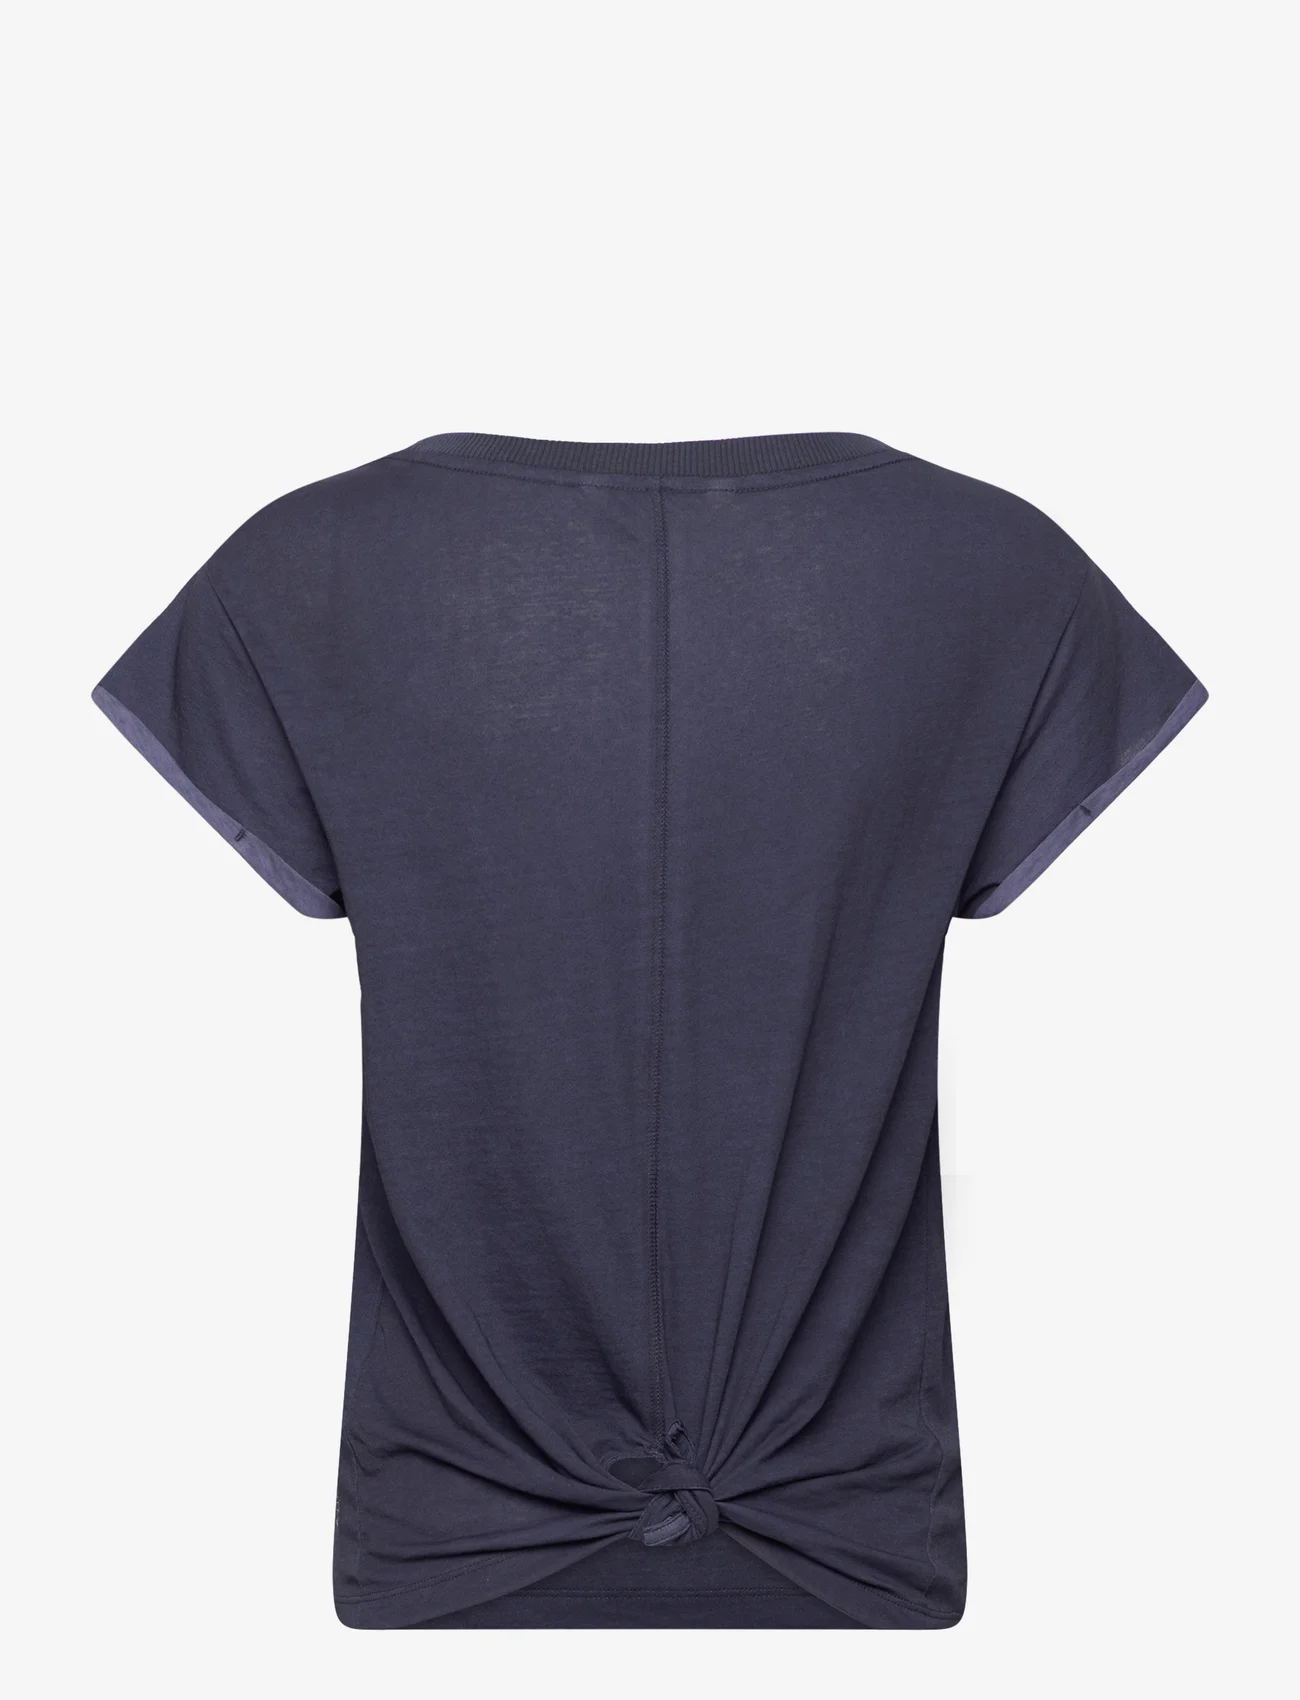 ODD MOLLY - Freya Top - t-shirts - dark blue - 1